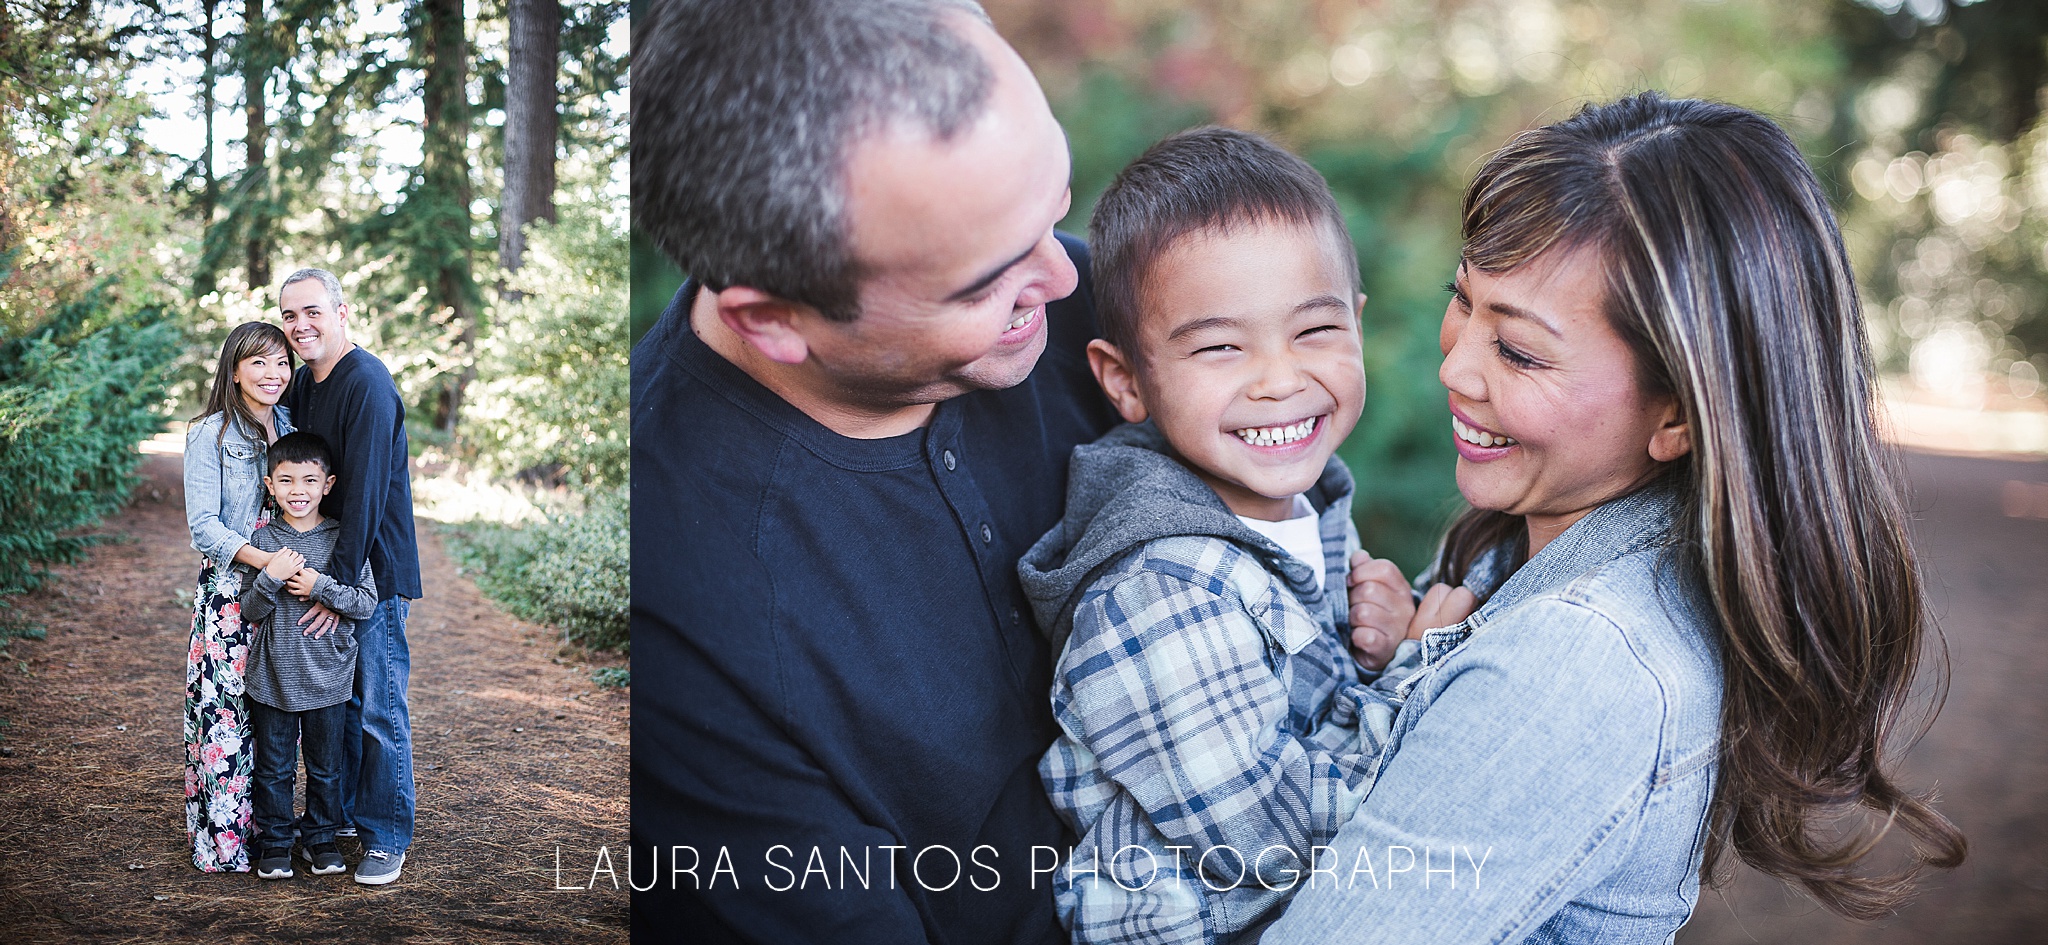 Laura Santos Photography Portland Oregon Family Photographer_0746.jpg